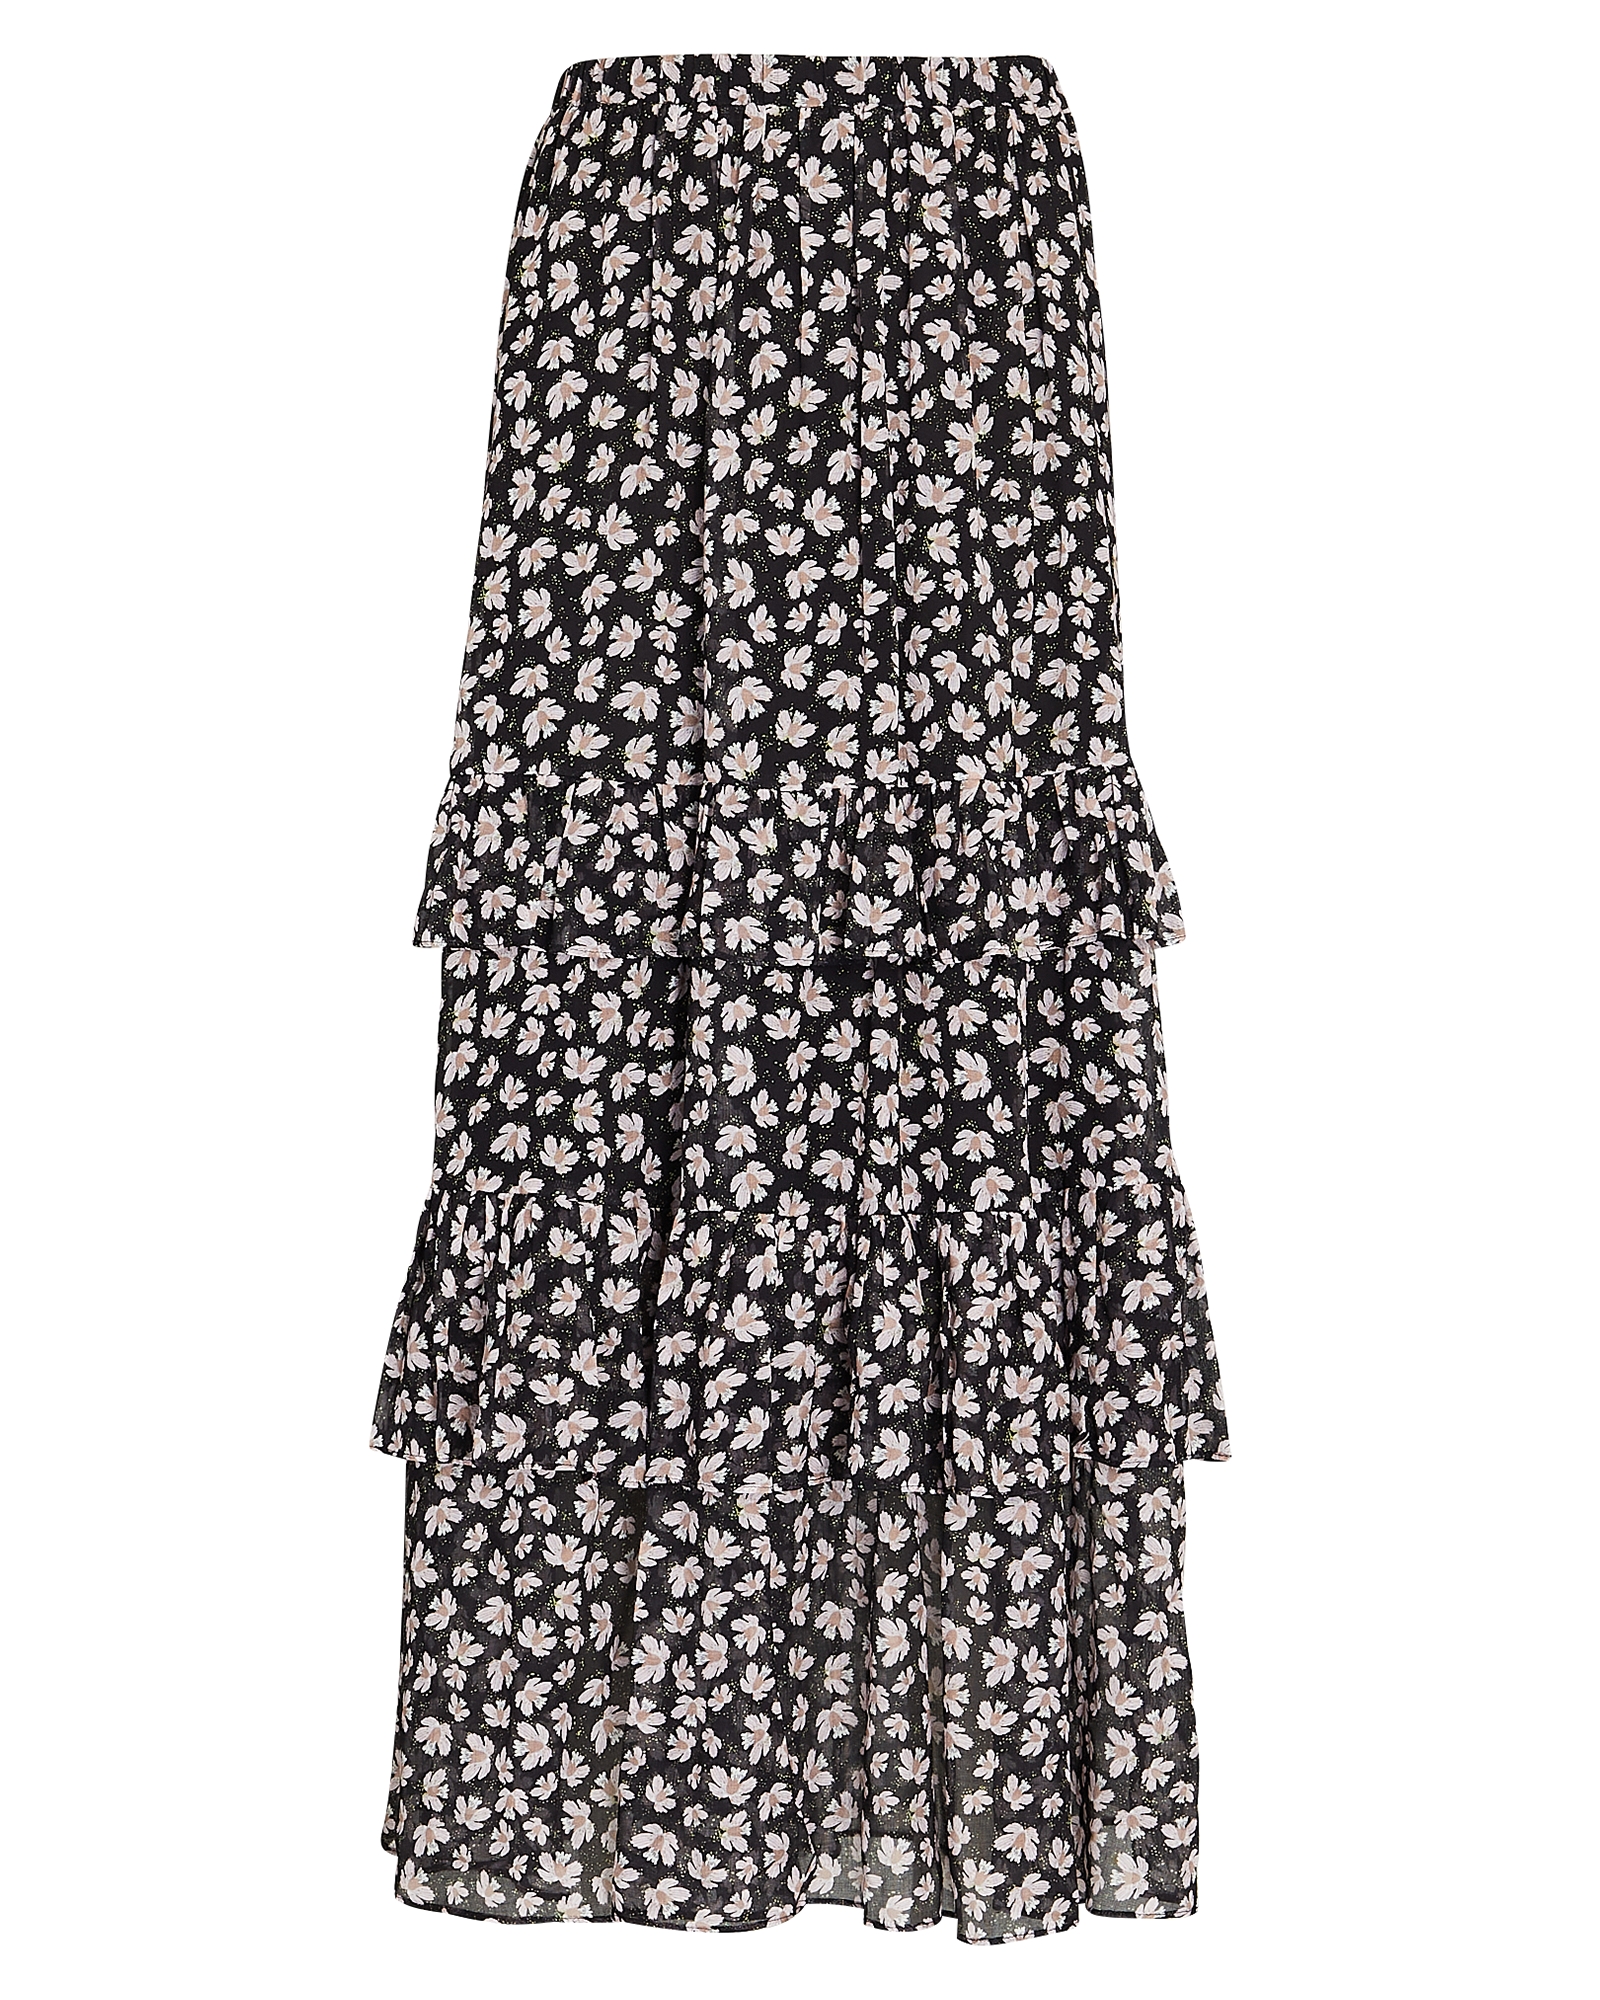 INTERMIX Private Label Odette Ruffled Floral Maxi Skirt | INTERMIX®